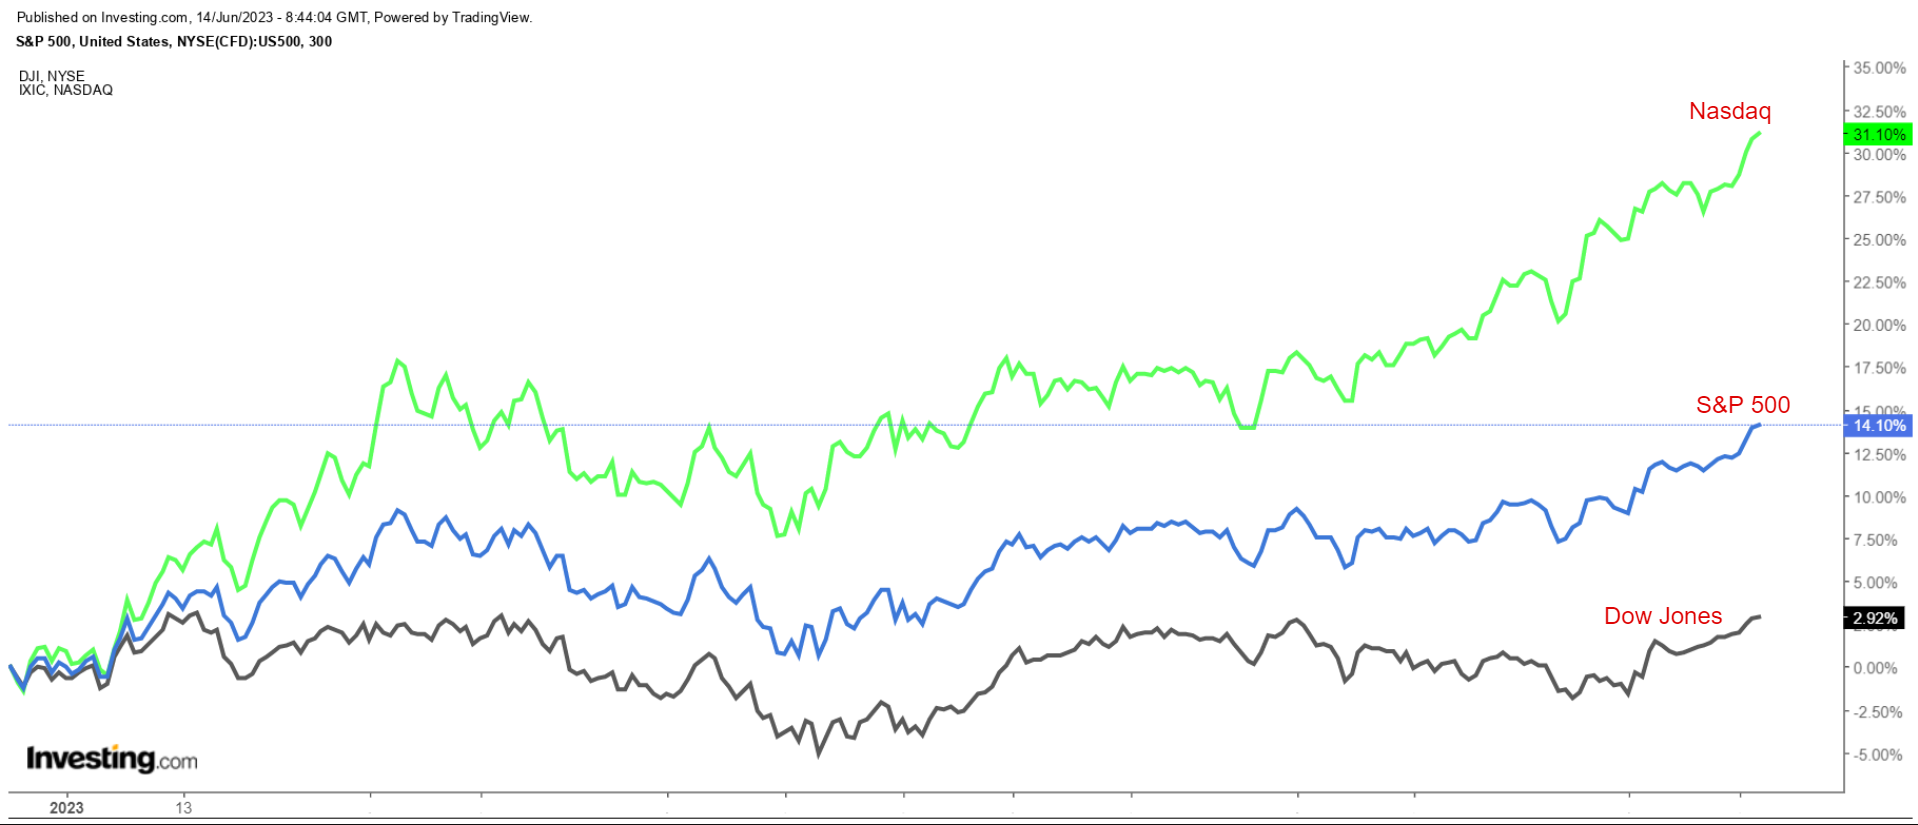 Nasdaq, S&P 500, Dow YTD Price Performance